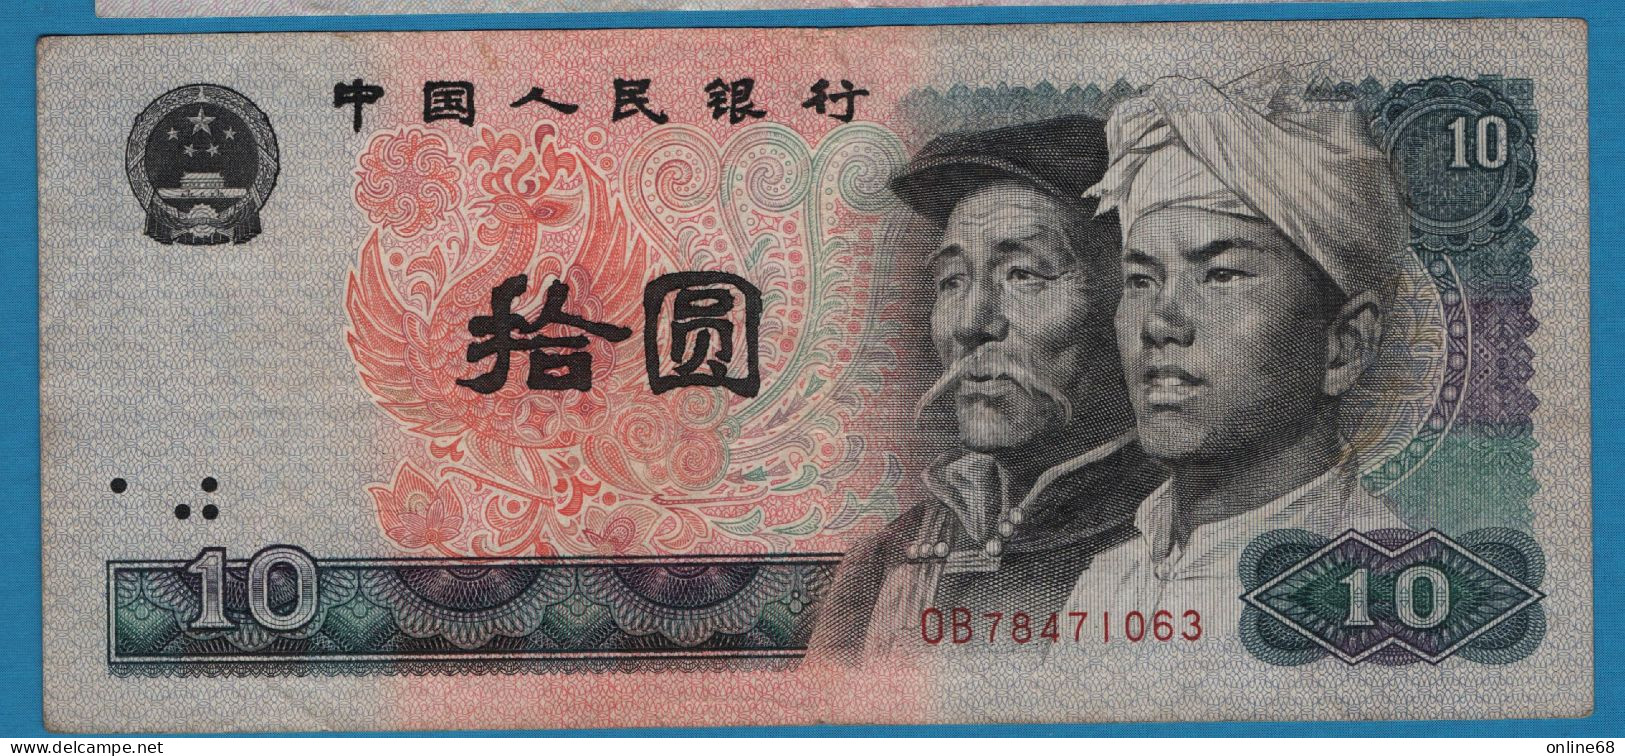 CHINA 10 YUAN 1980 # OB78471063 P# 887 Mount Everest - China